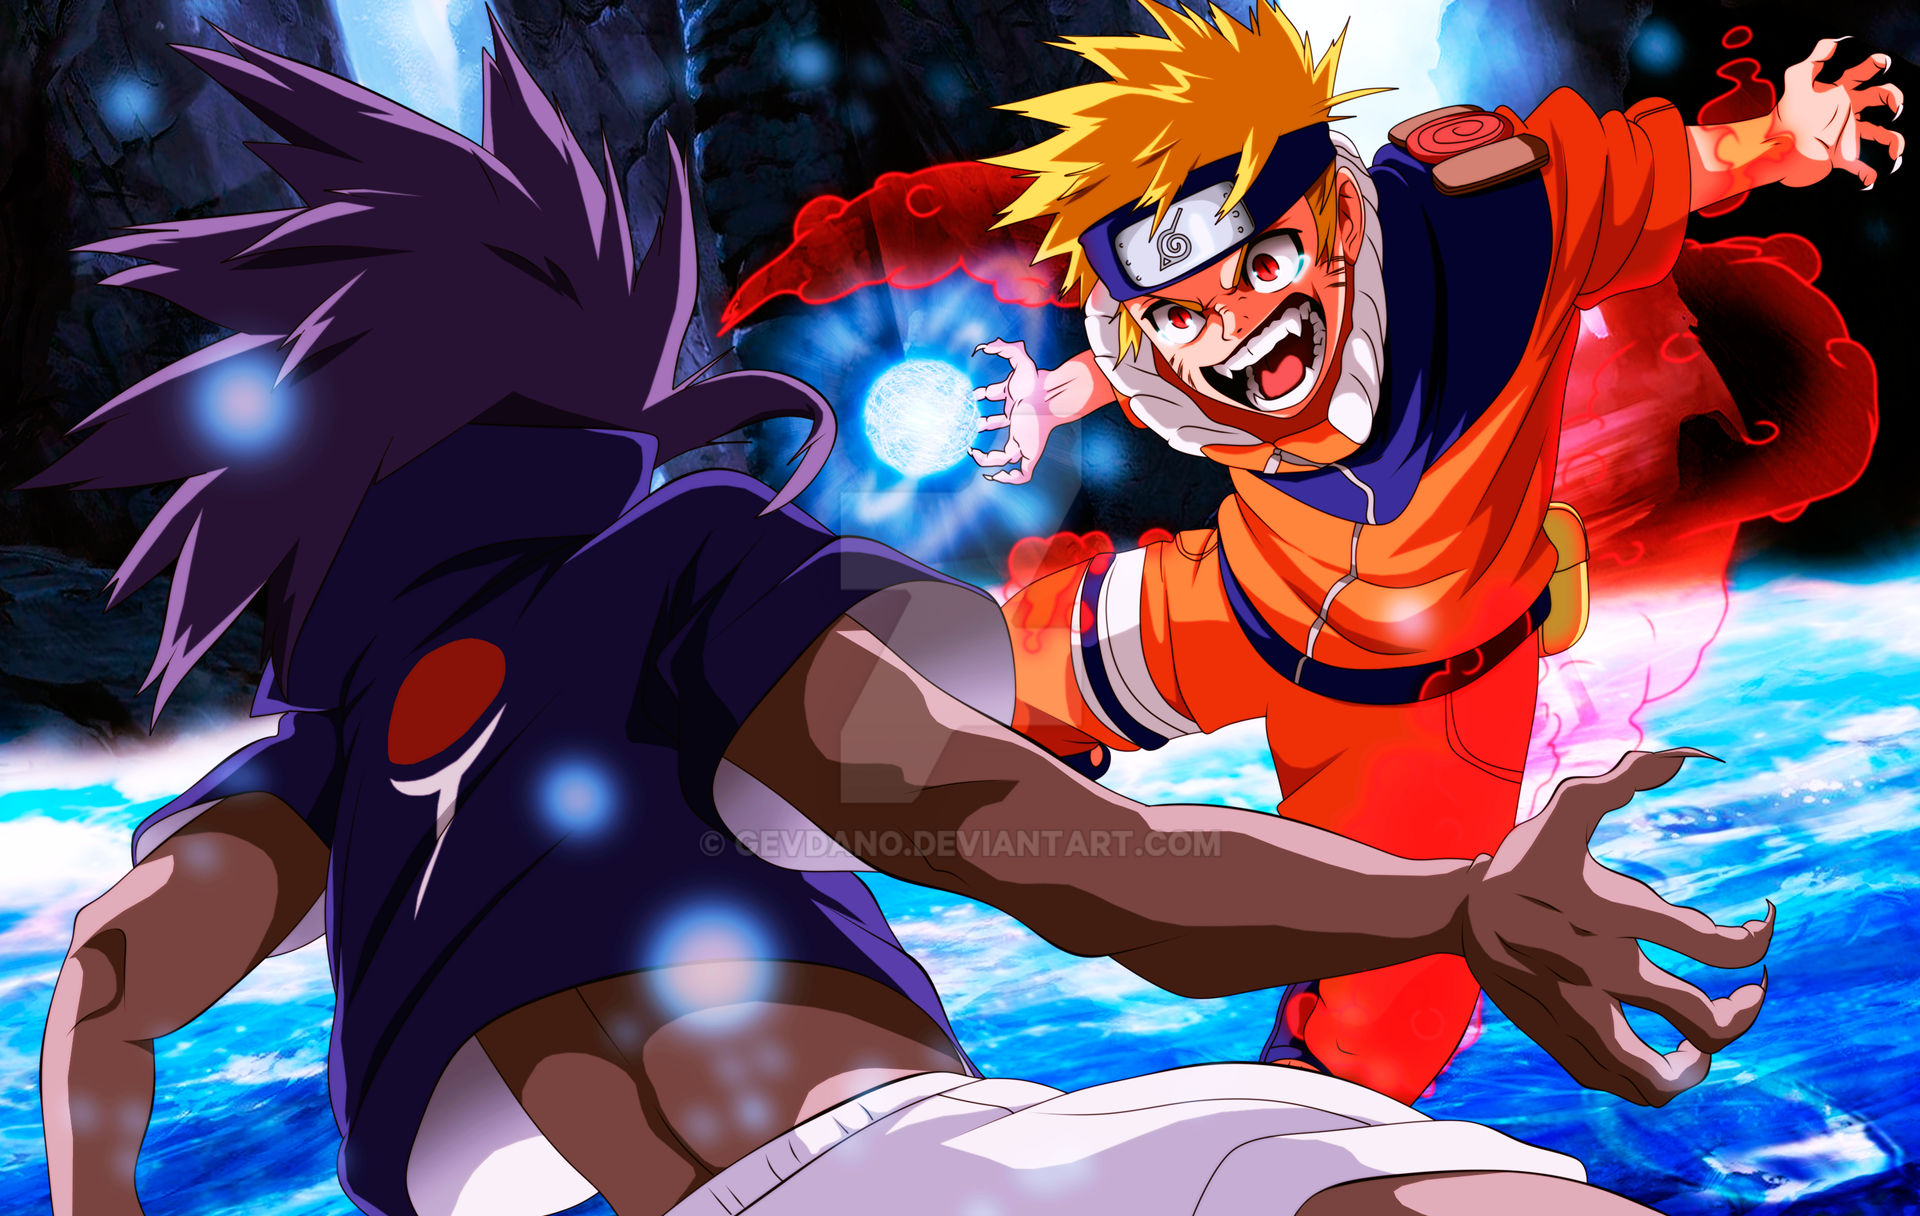 Sasuke vs Naruto 2 by Gih-DP on DeviantArt